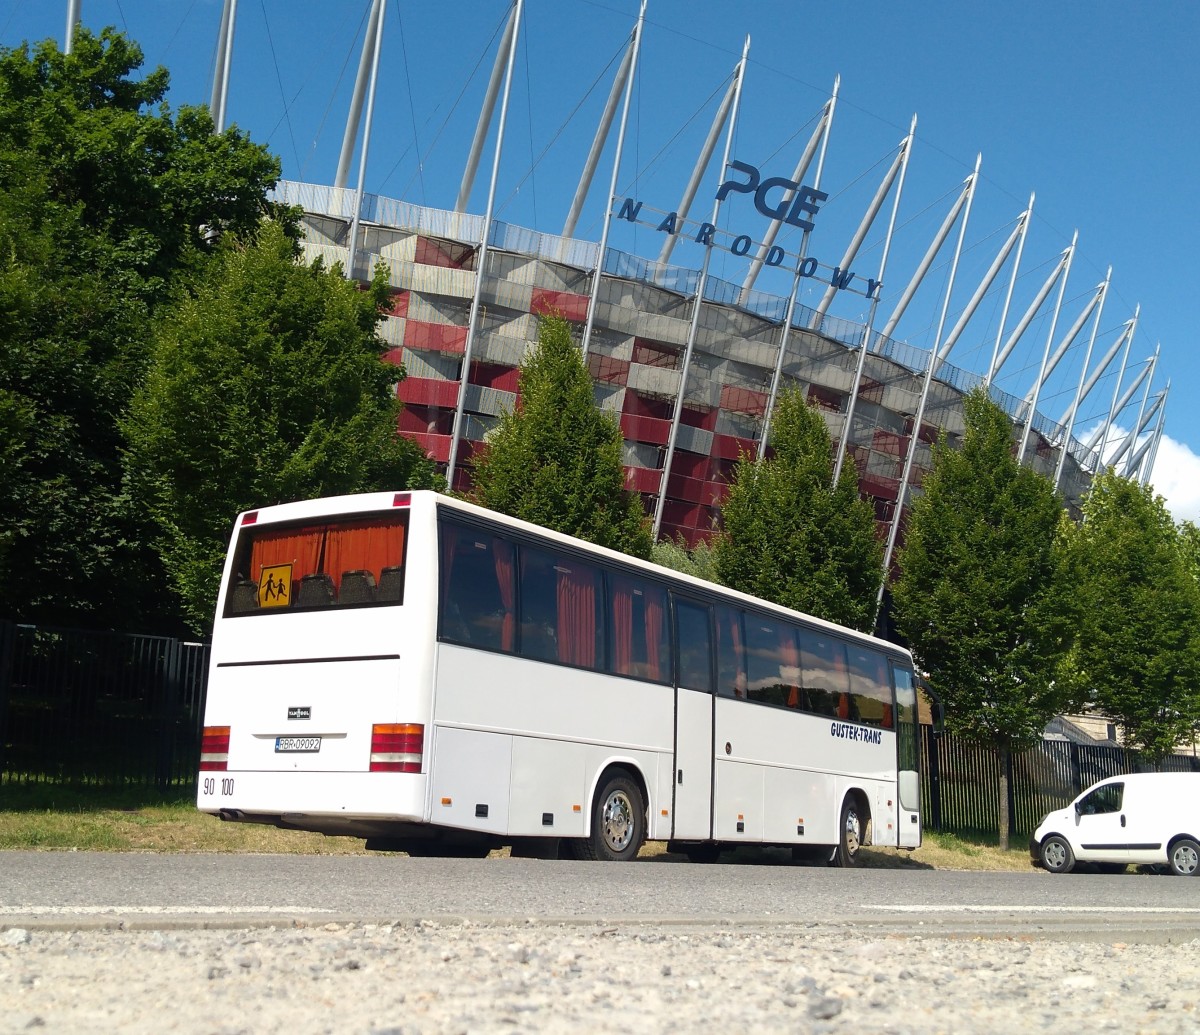 Bus and Stadium in background